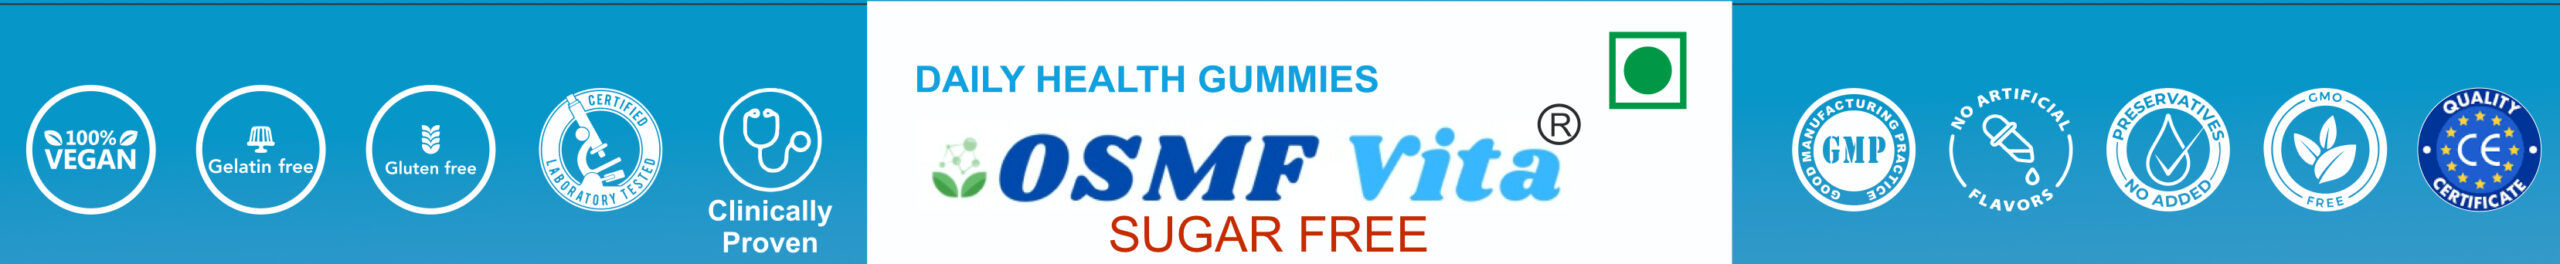 OSMF VITA Gummies Icon Label Sugar free